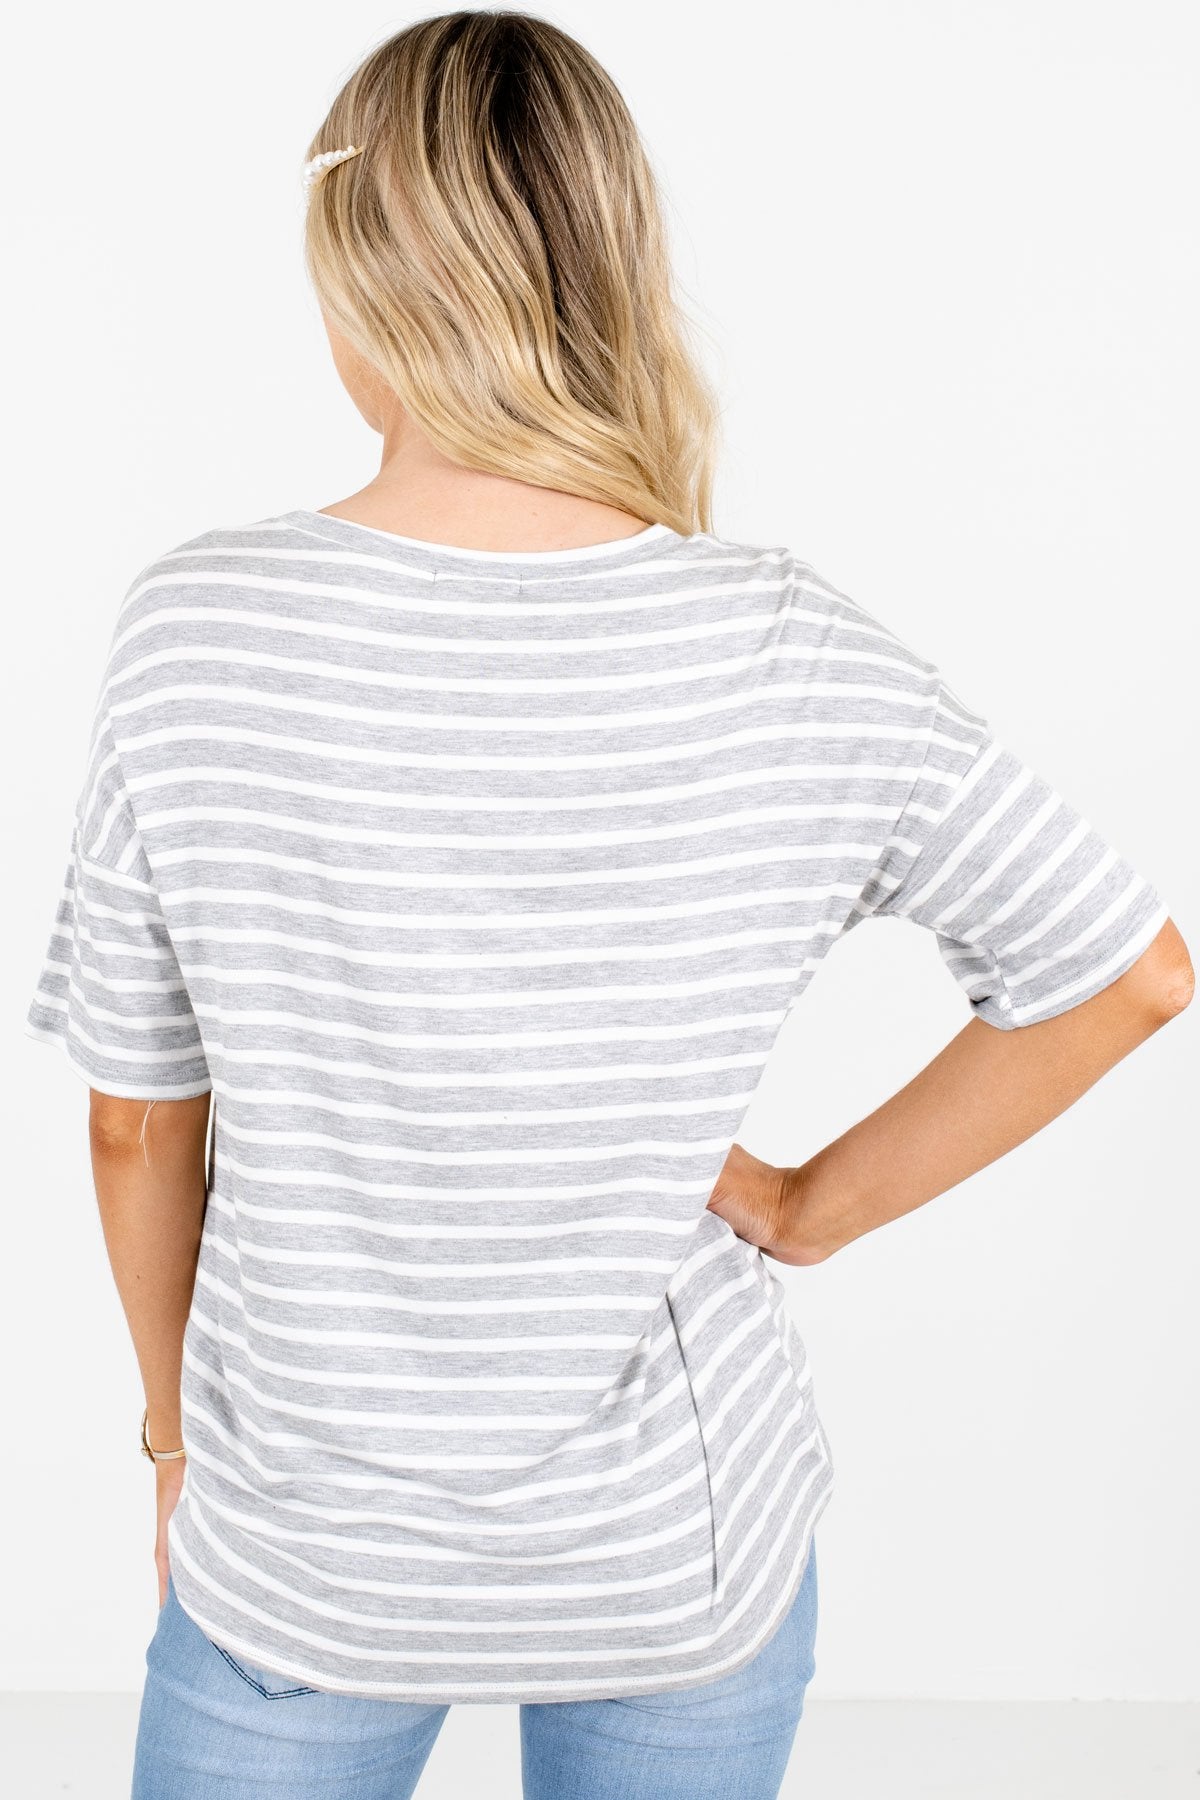 Women’s Gray Short Sleeve Boutique Tops